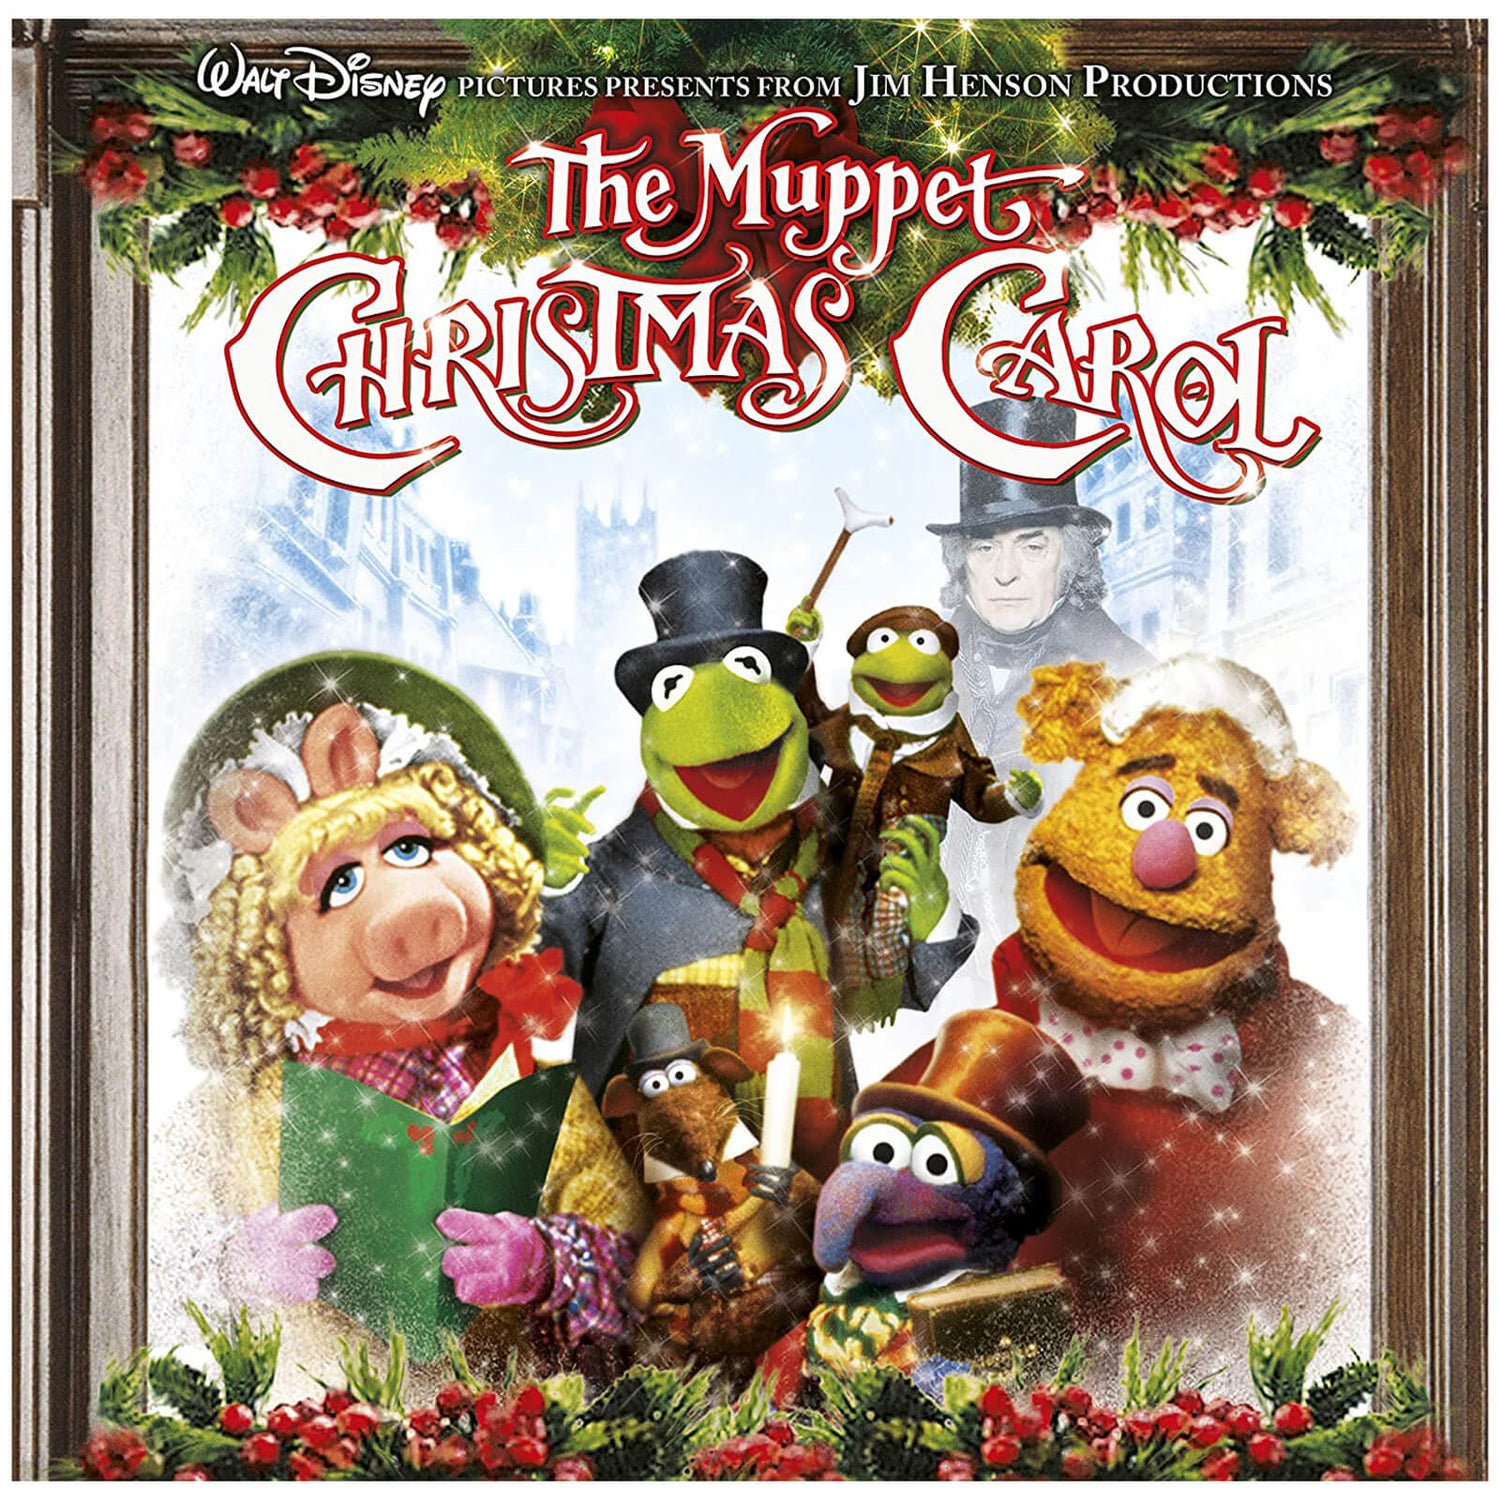 The Muppet Christmas Carol Soundtrack Limited Edition Vinyl